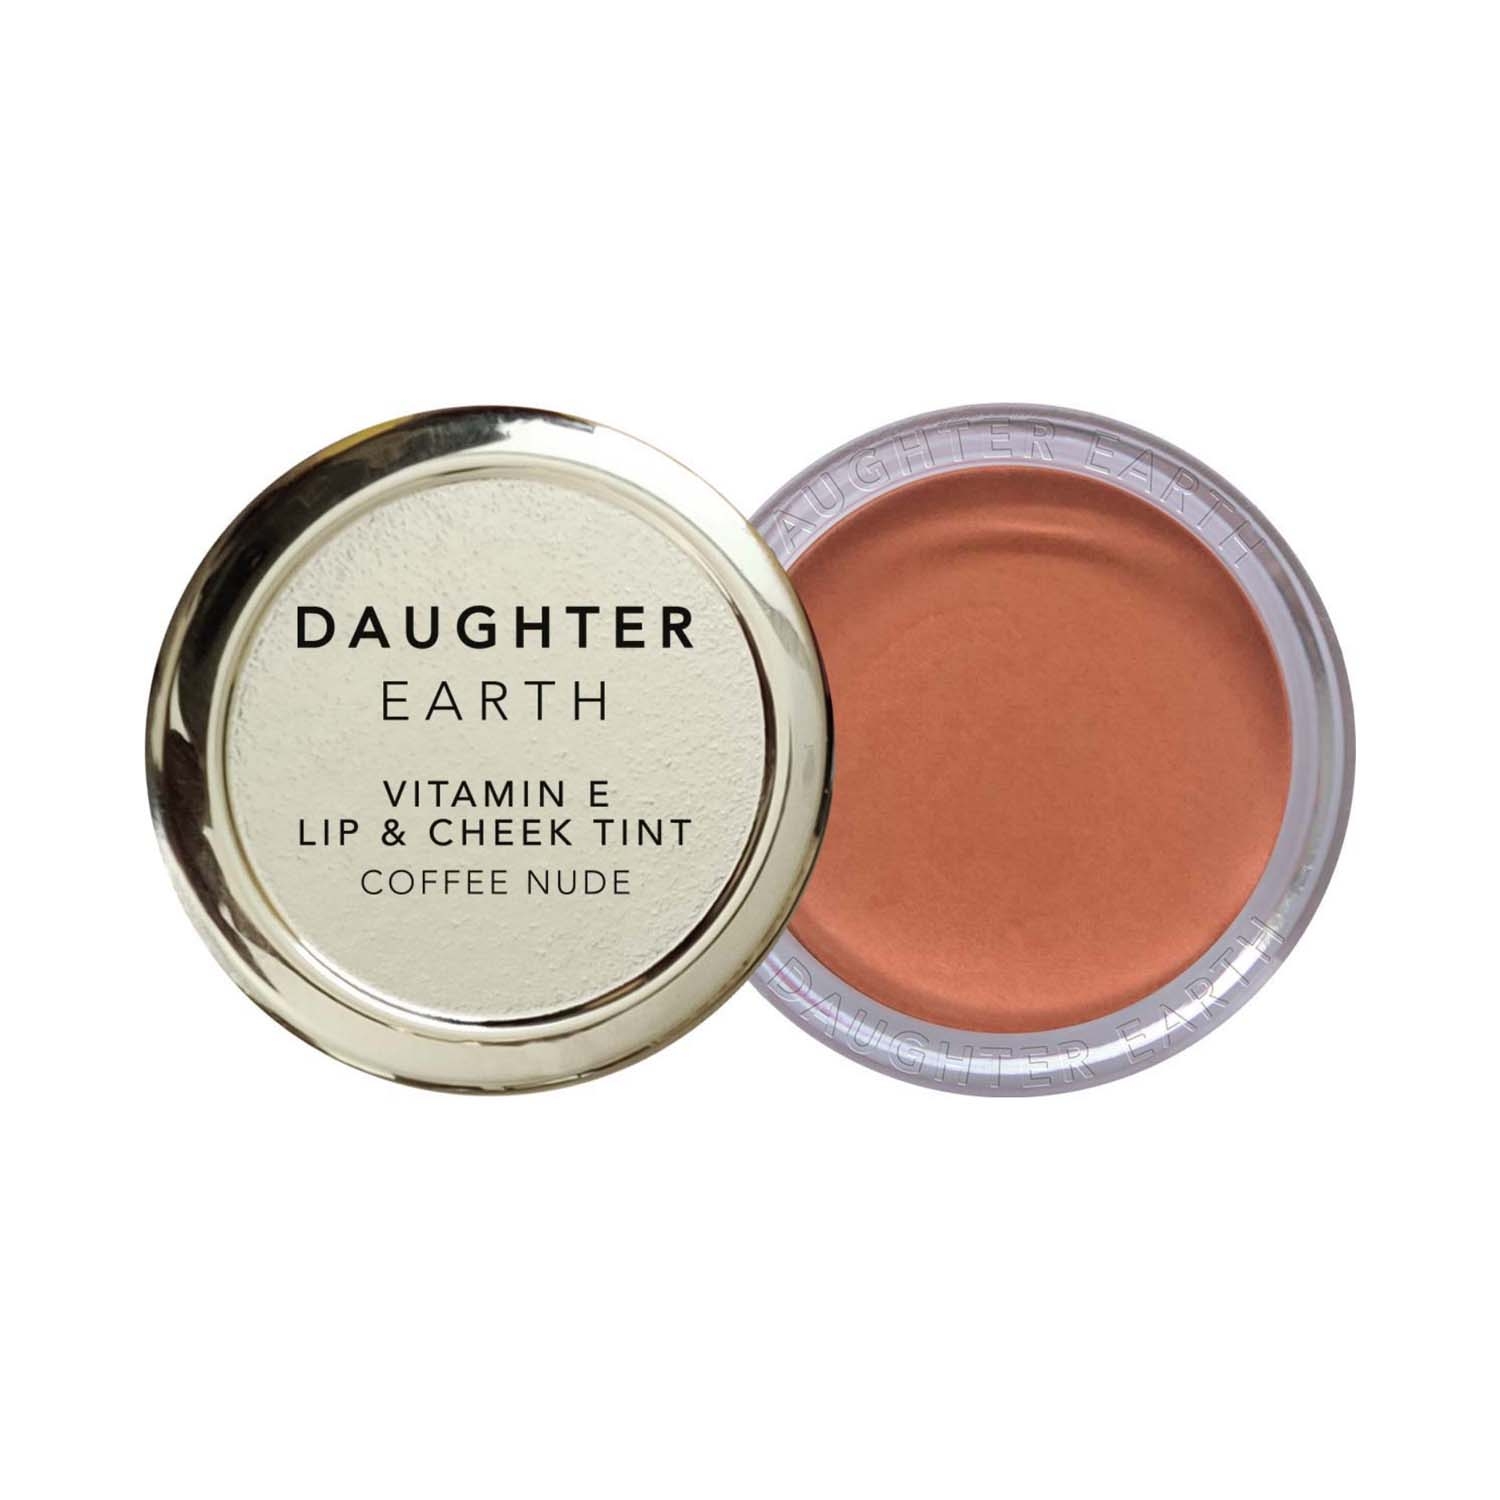  | DAUGHTER EARTH Vitamin E Lip & Cheek Tint - Coffee Nude (4.5g)